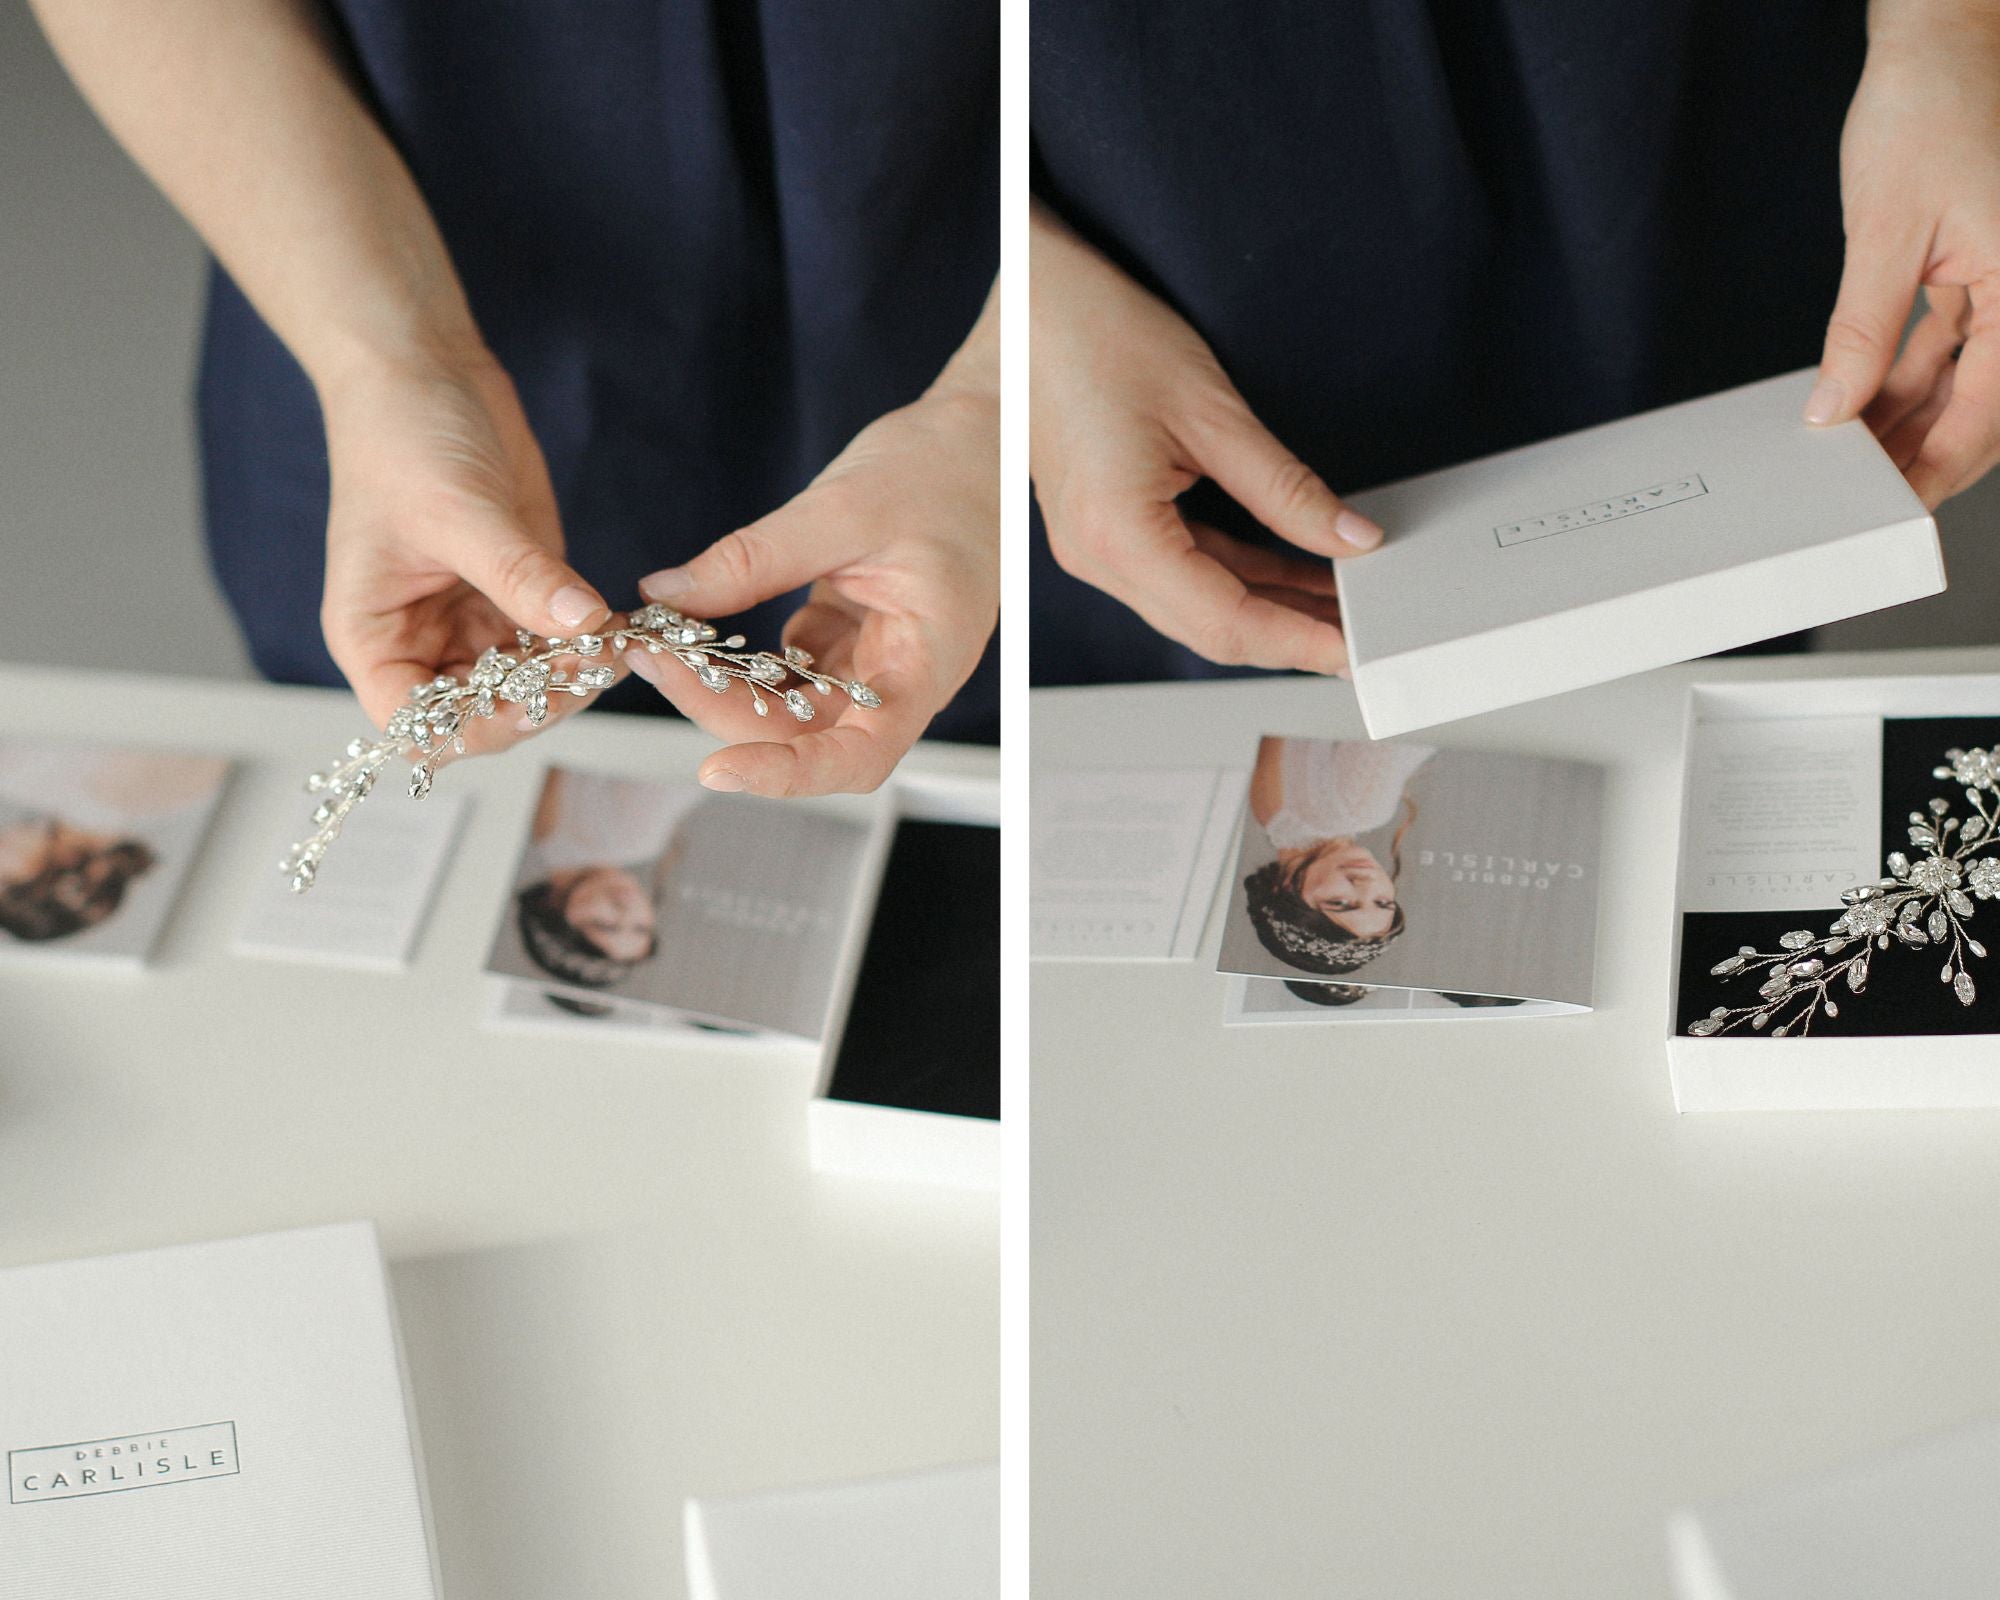 packaging a bridal hair accessory following a bespoke bridal consultation